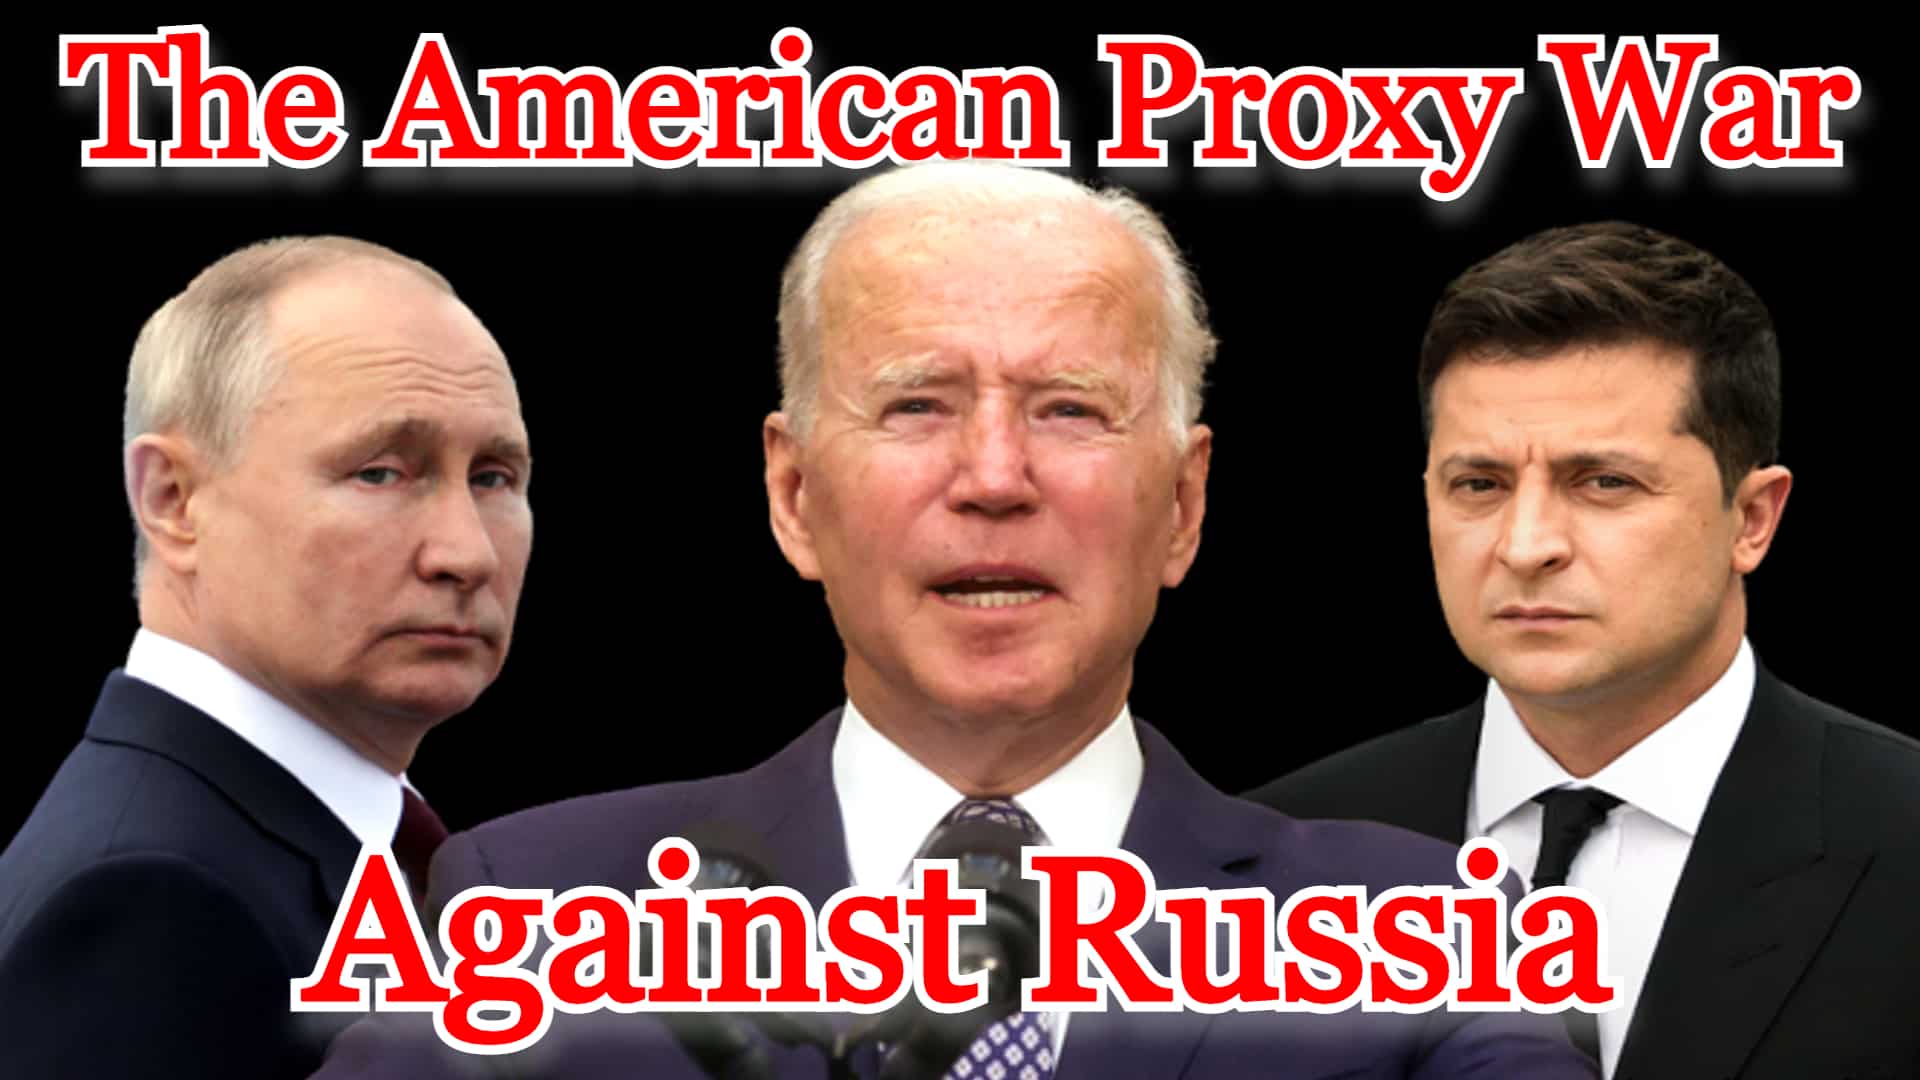 COI #275: America’s Long War Against Russia